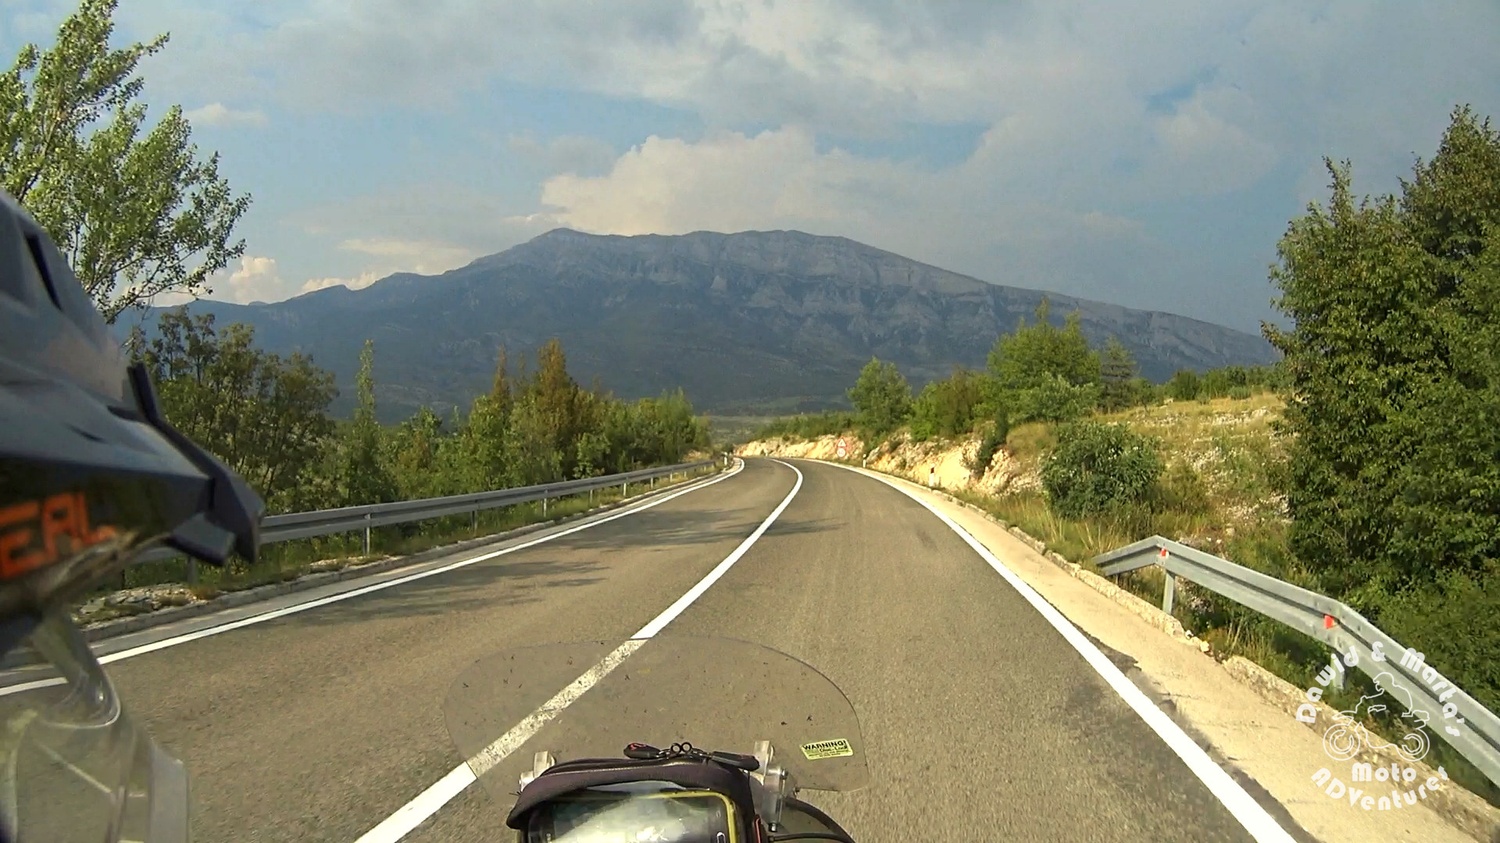 Road 1 from Knin to Izvor Cetine, inland Croatia